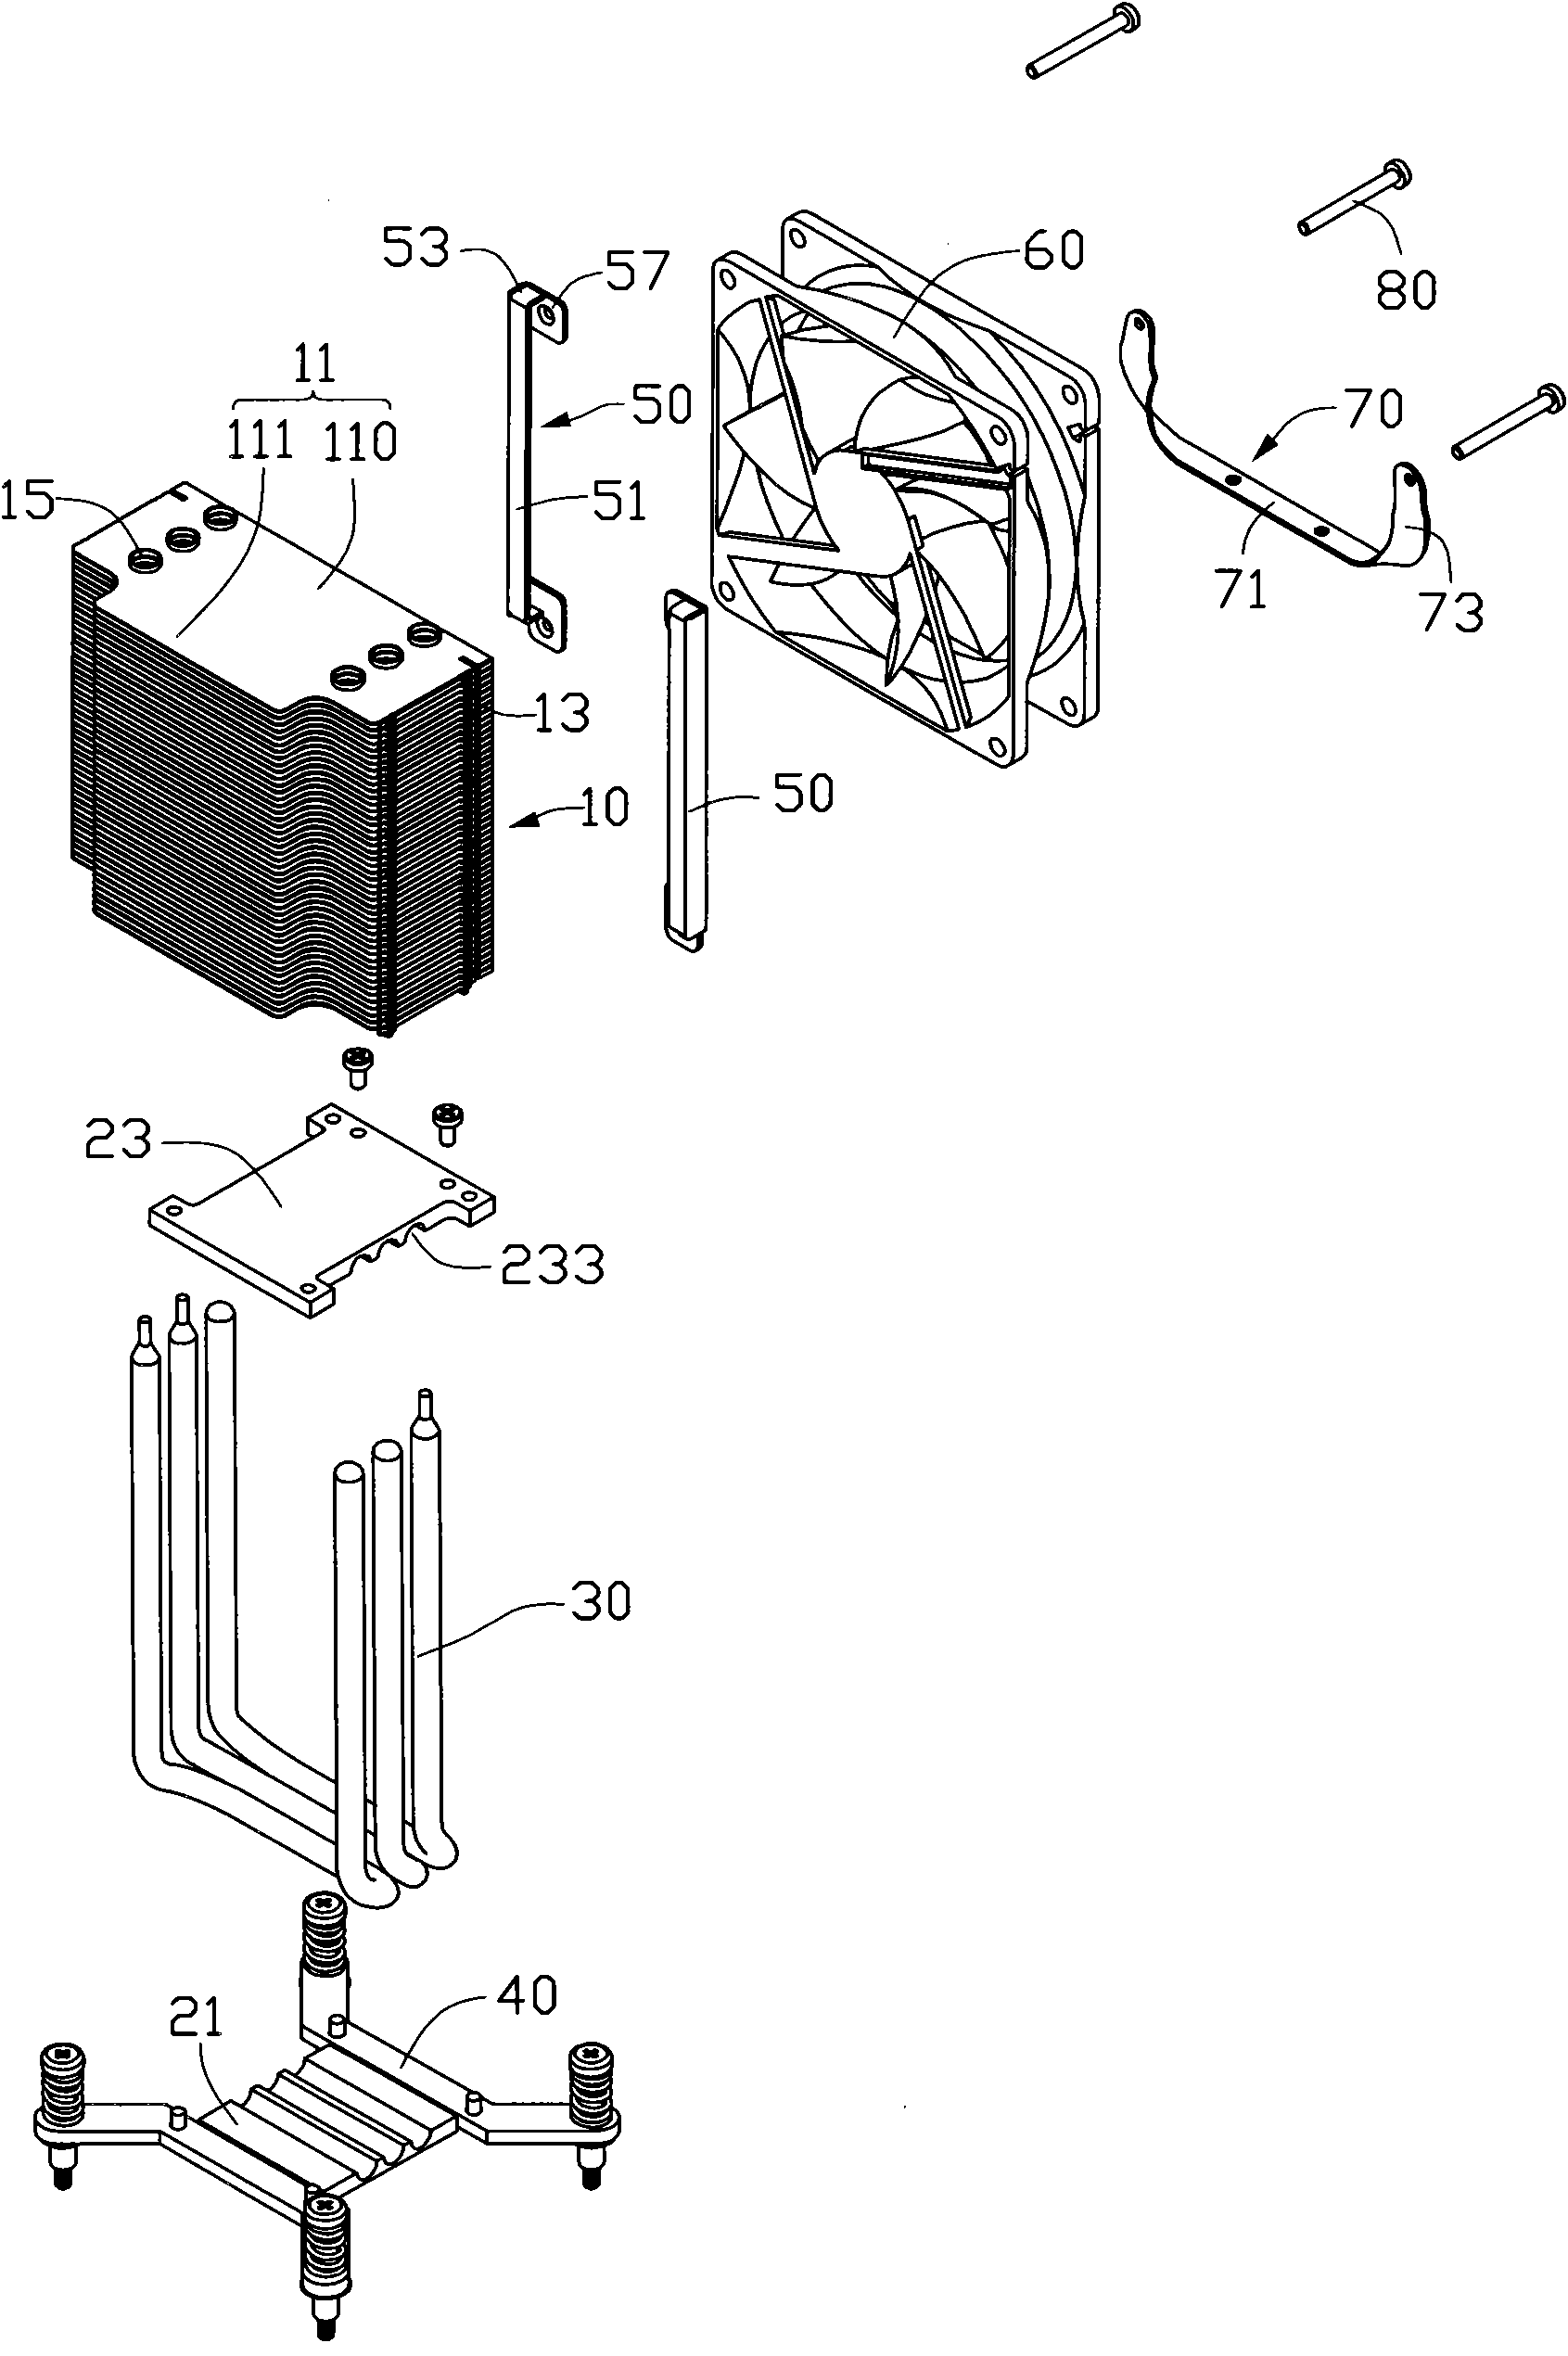 Heat radiator